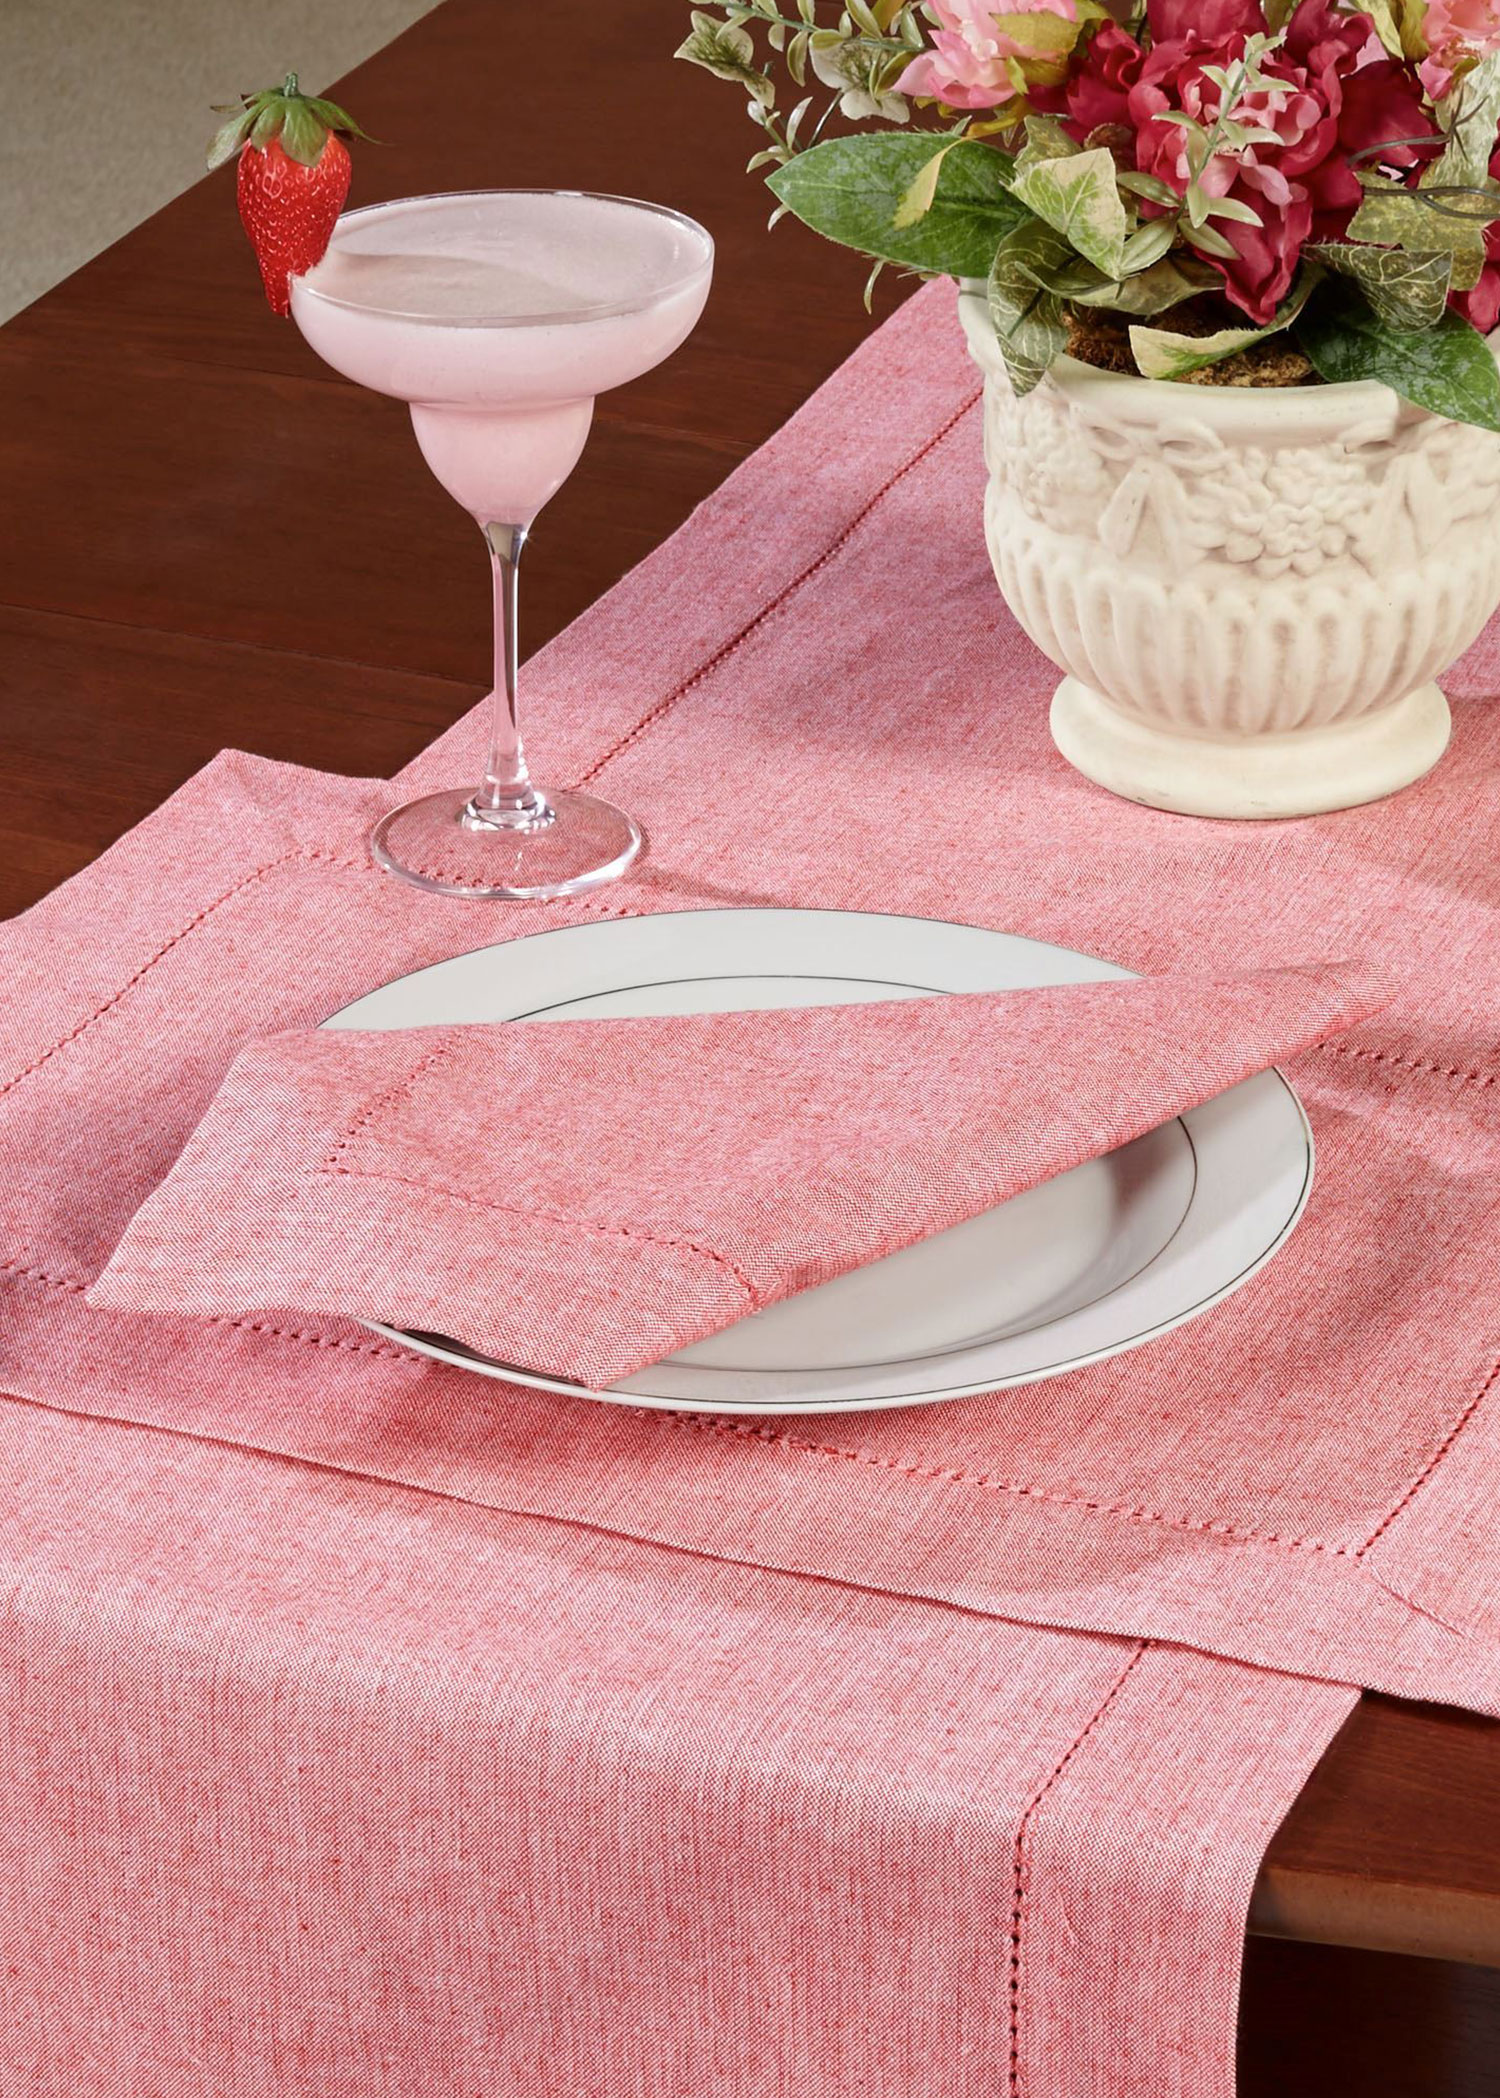 natural-textiles-cotton-table-linen